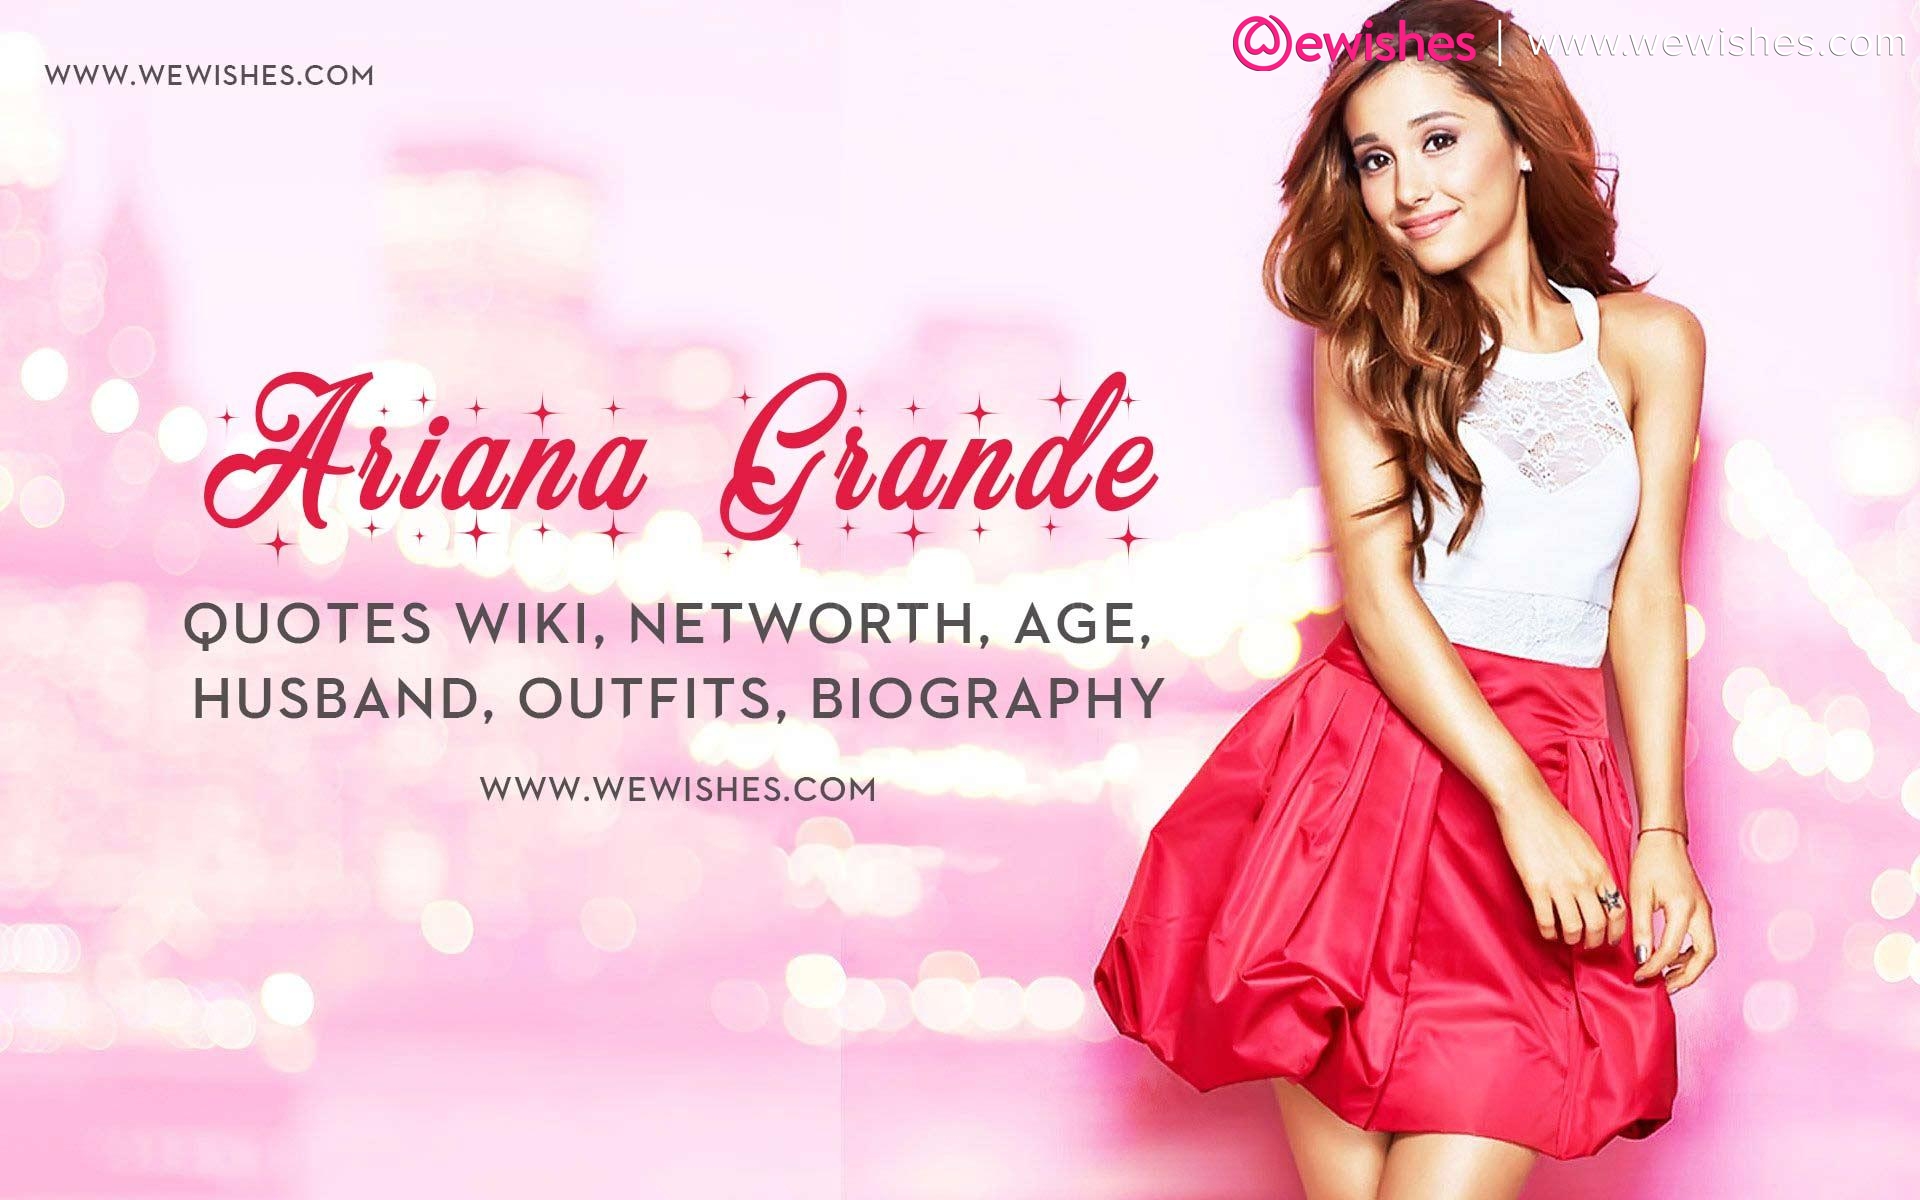 Ariana Grande bio